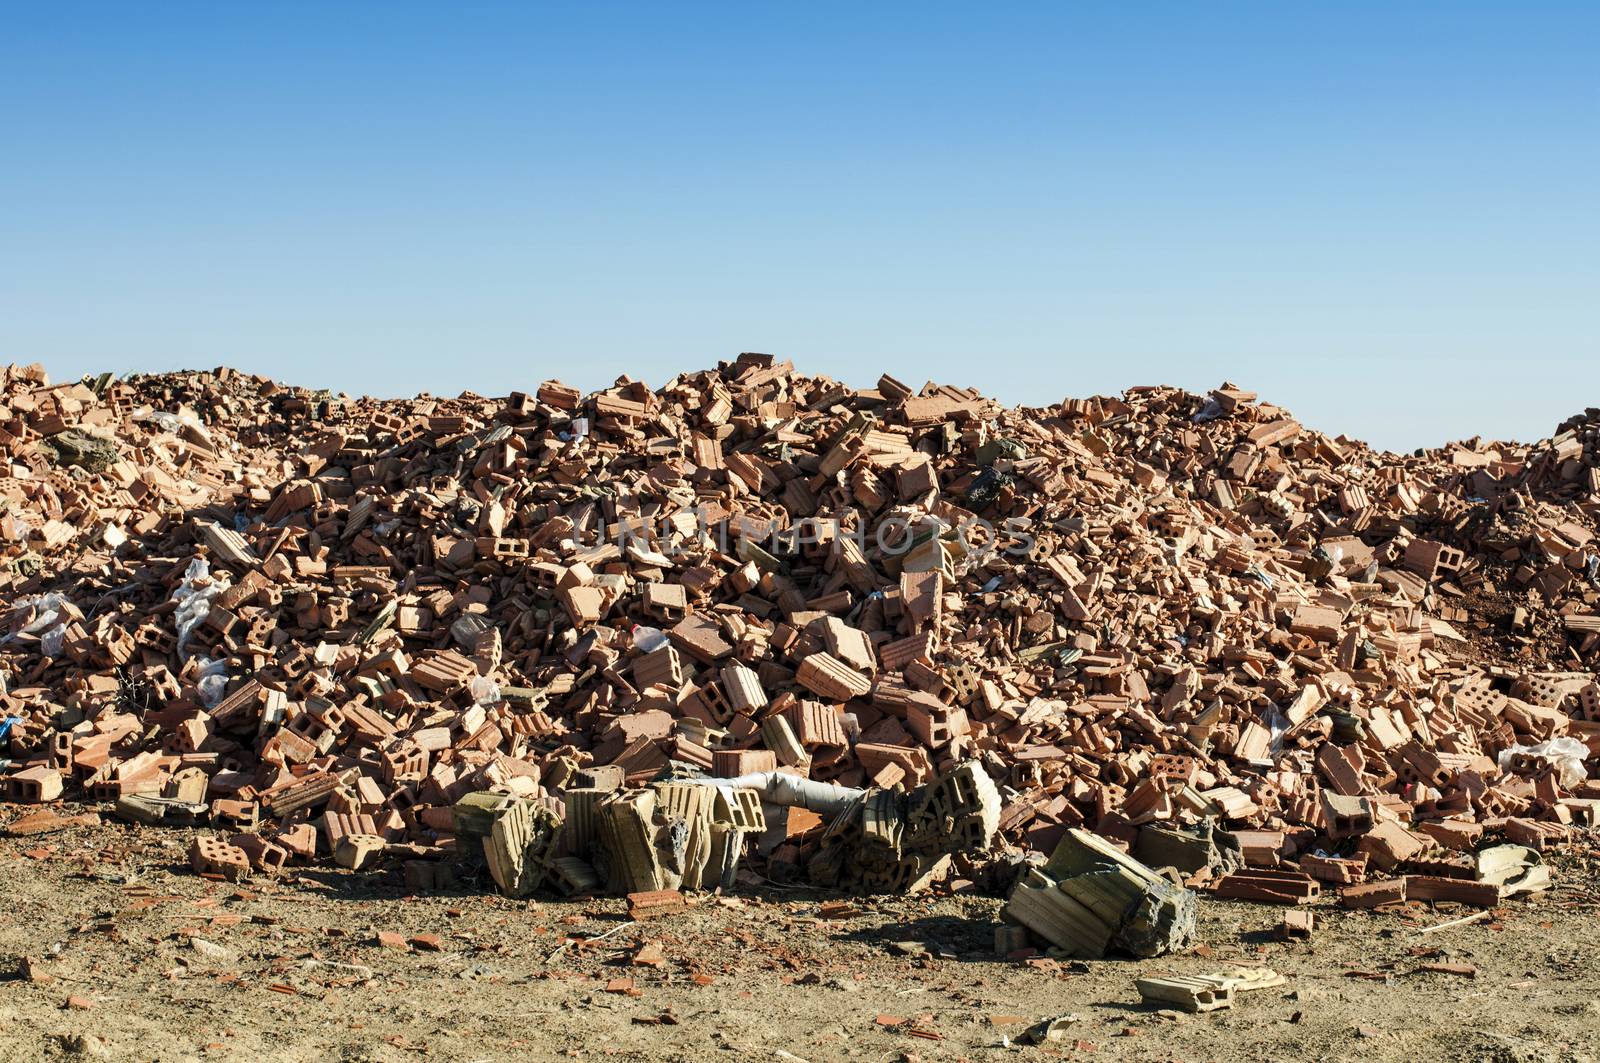 Landfill for disposal of construction waste. Brick debris